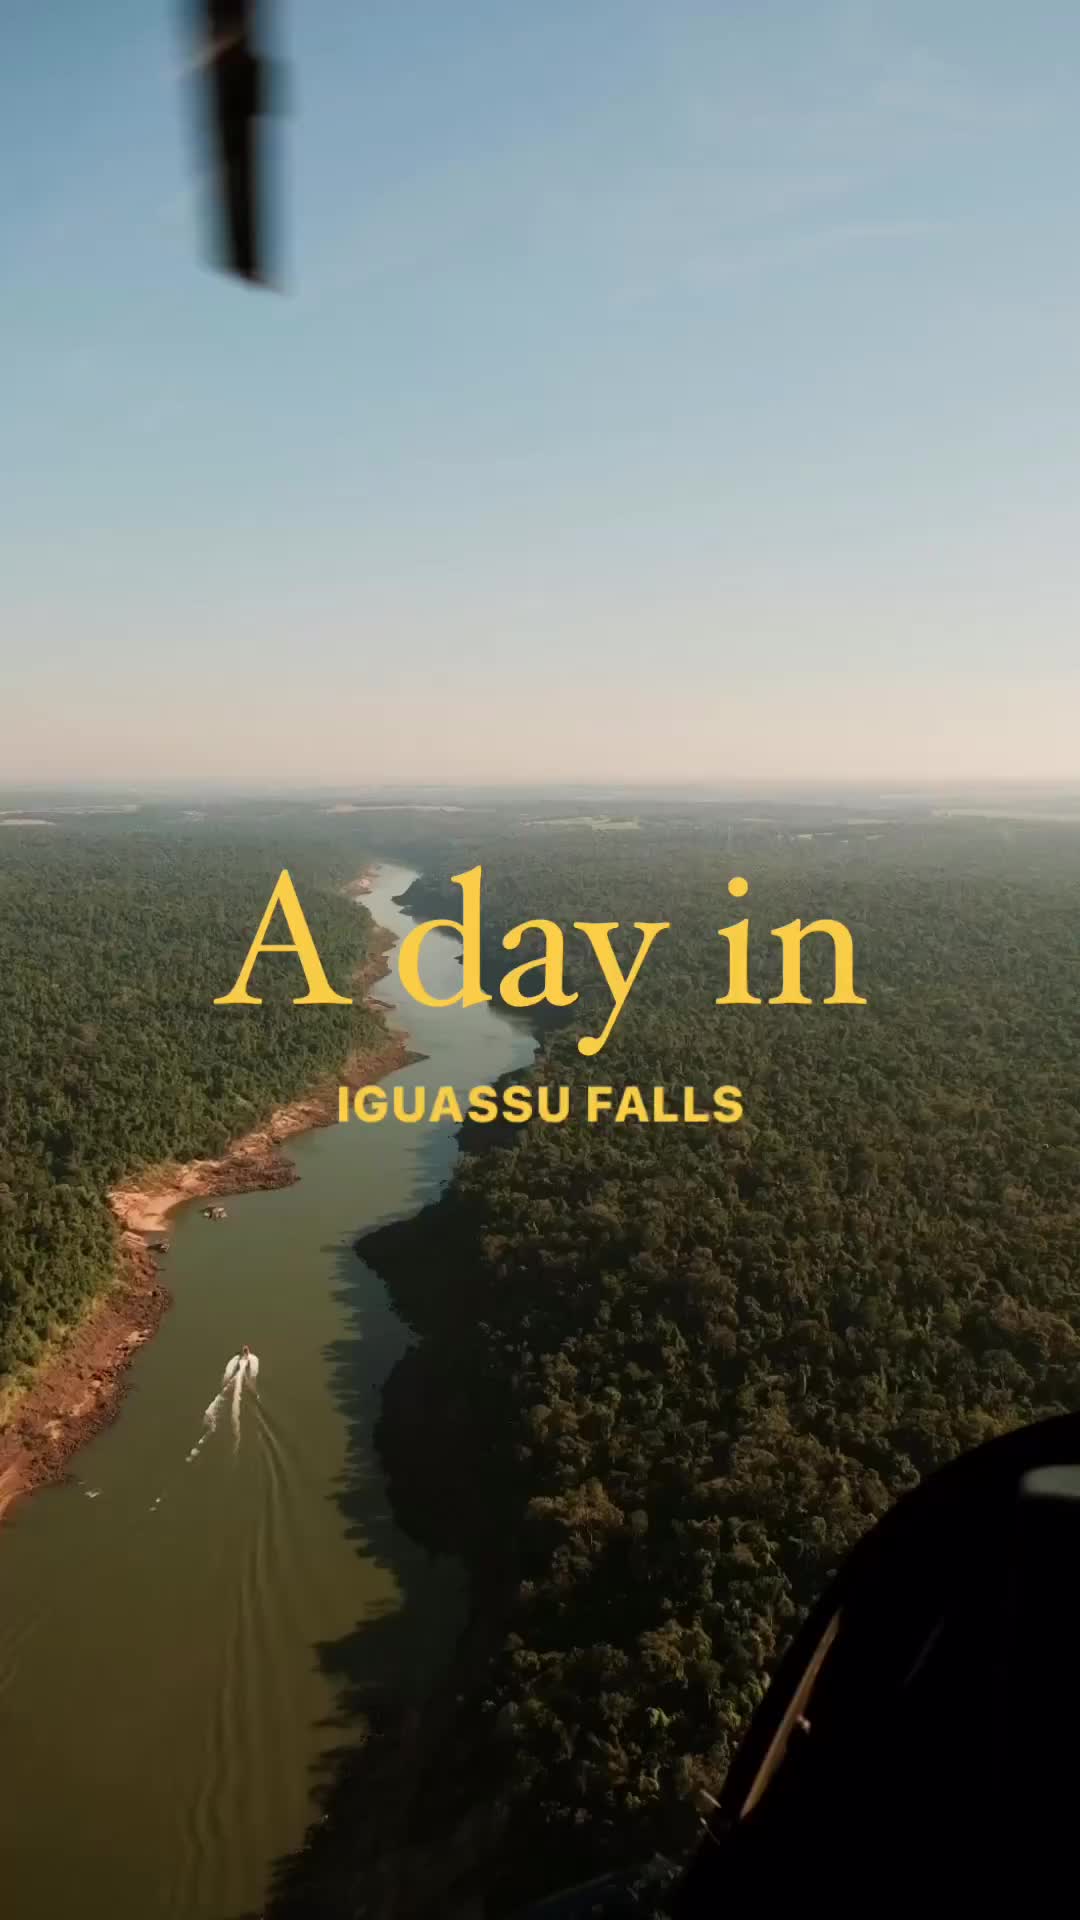 Flying Over Iguazu Falls at Sunset - Bucket List Experience